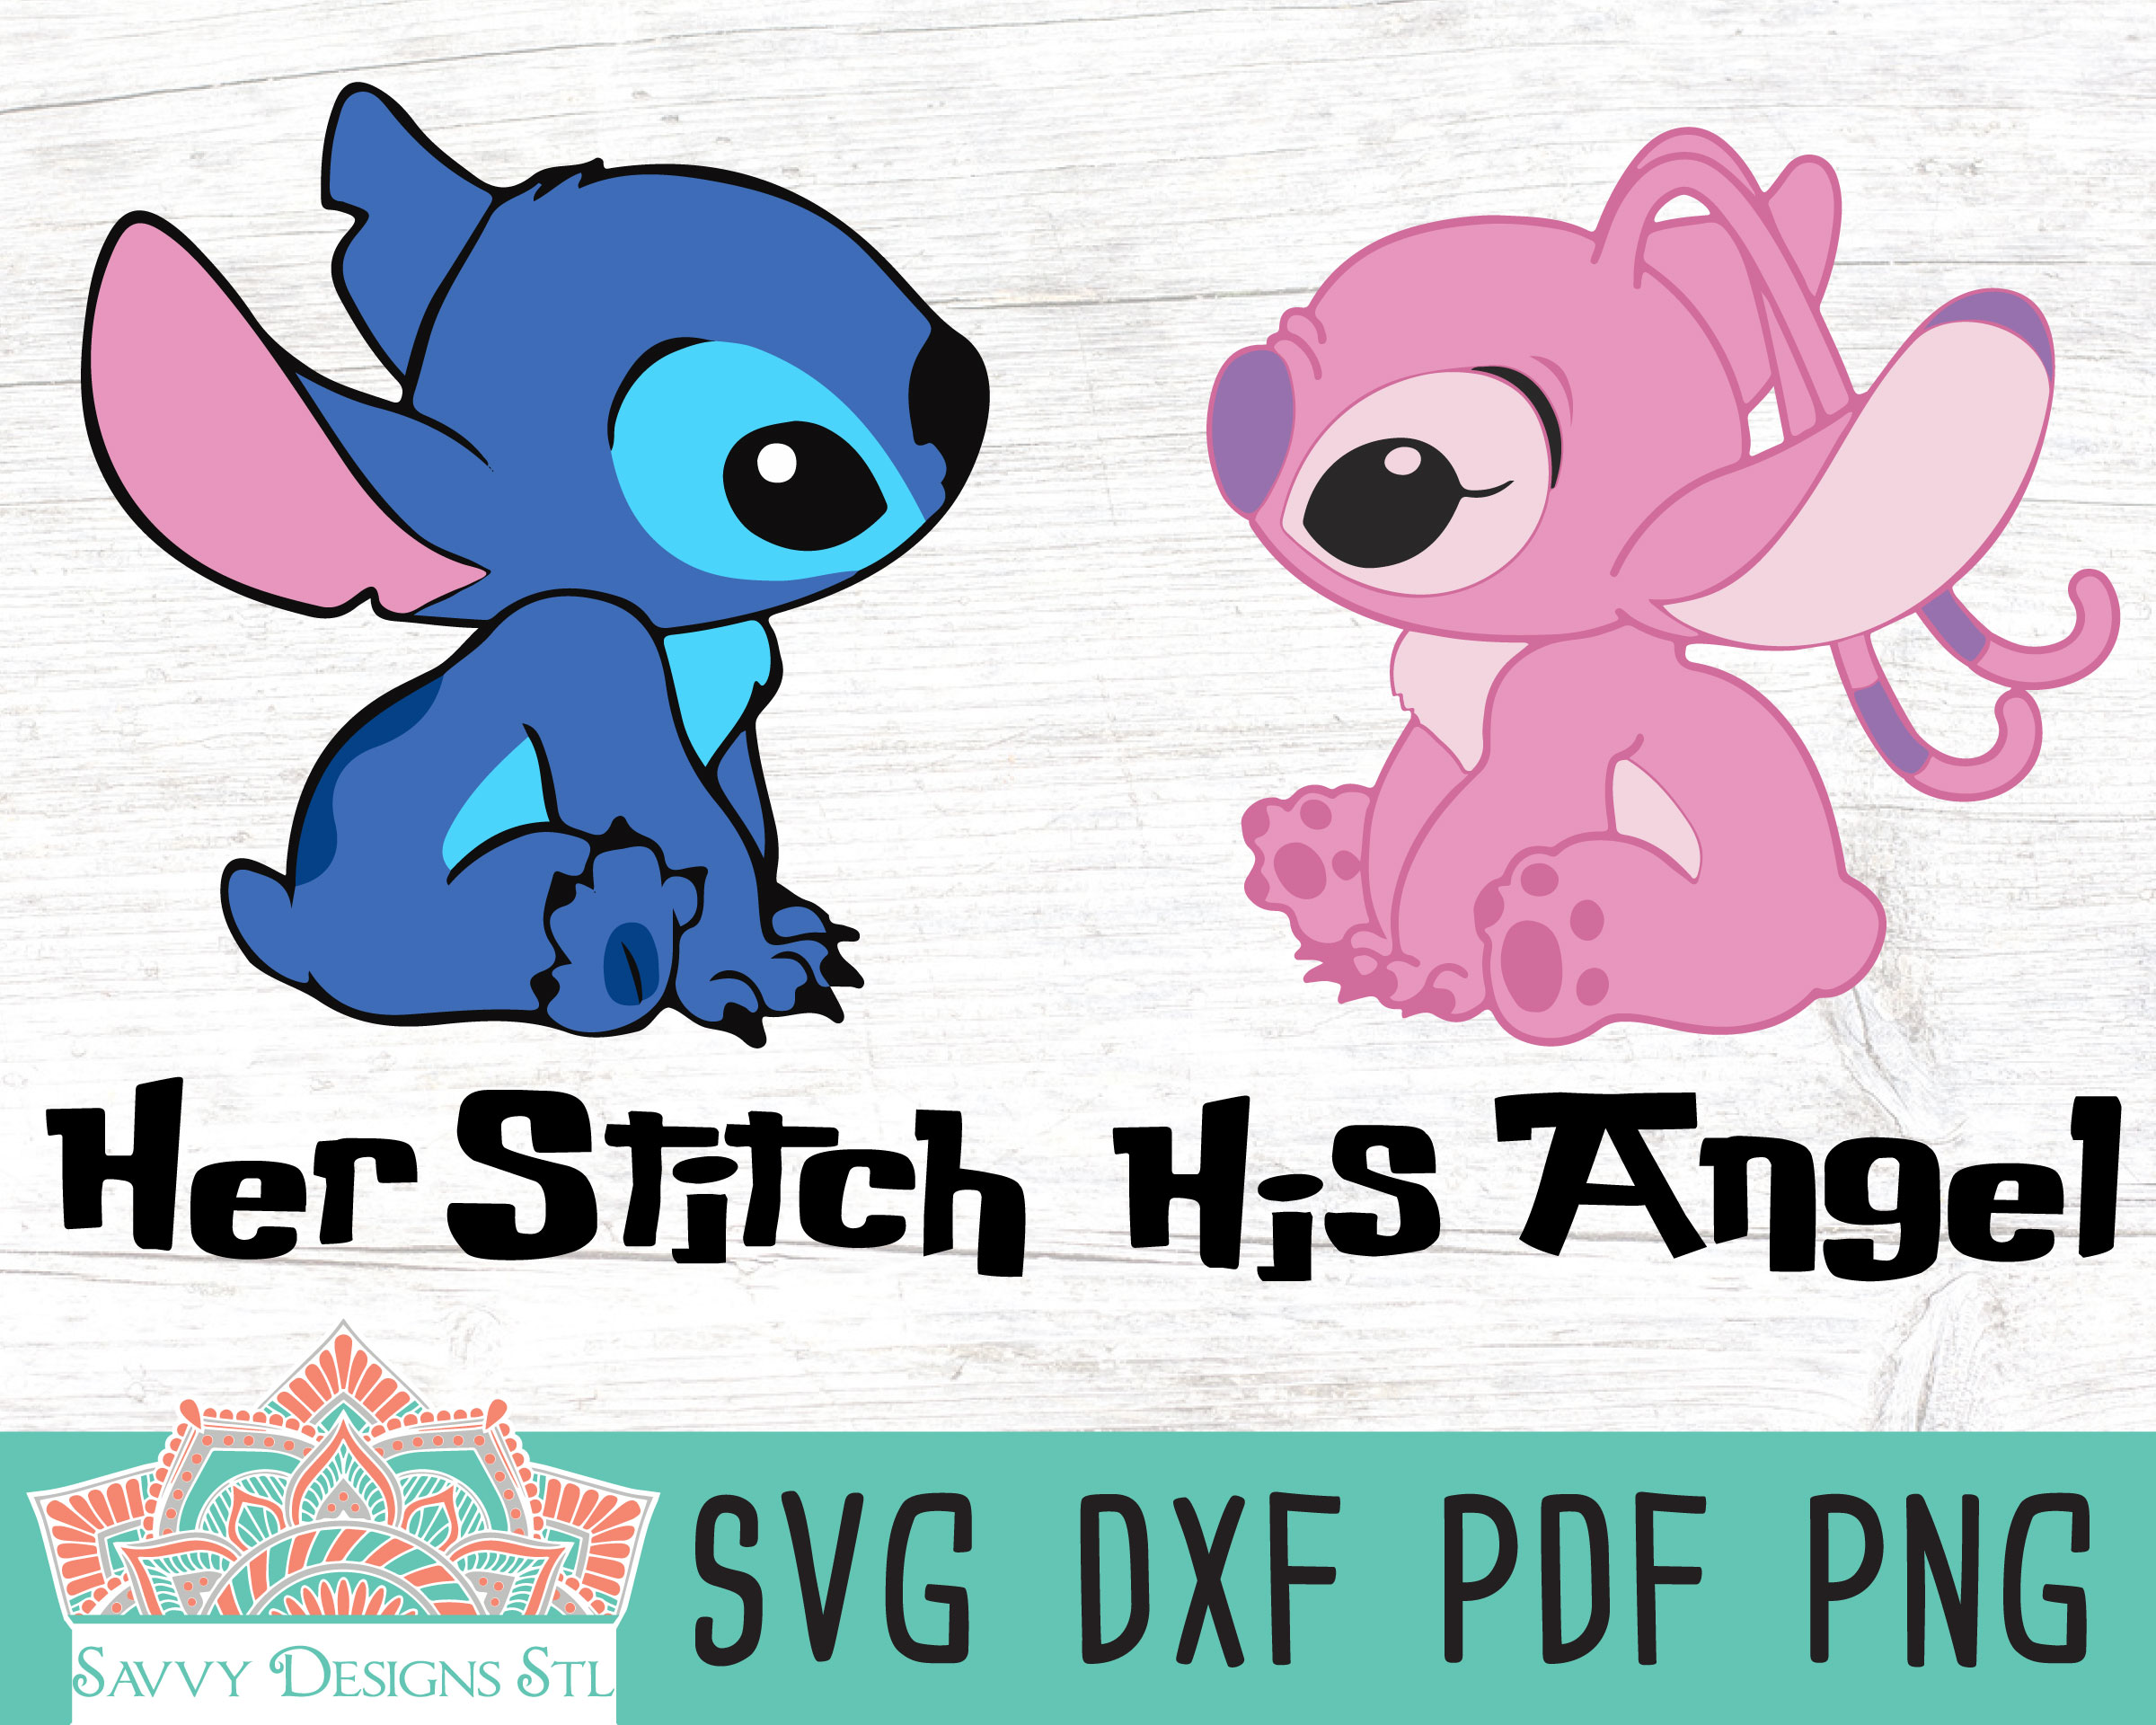 Download Her Stitch His Angel Cut File Savvy Designs Stl